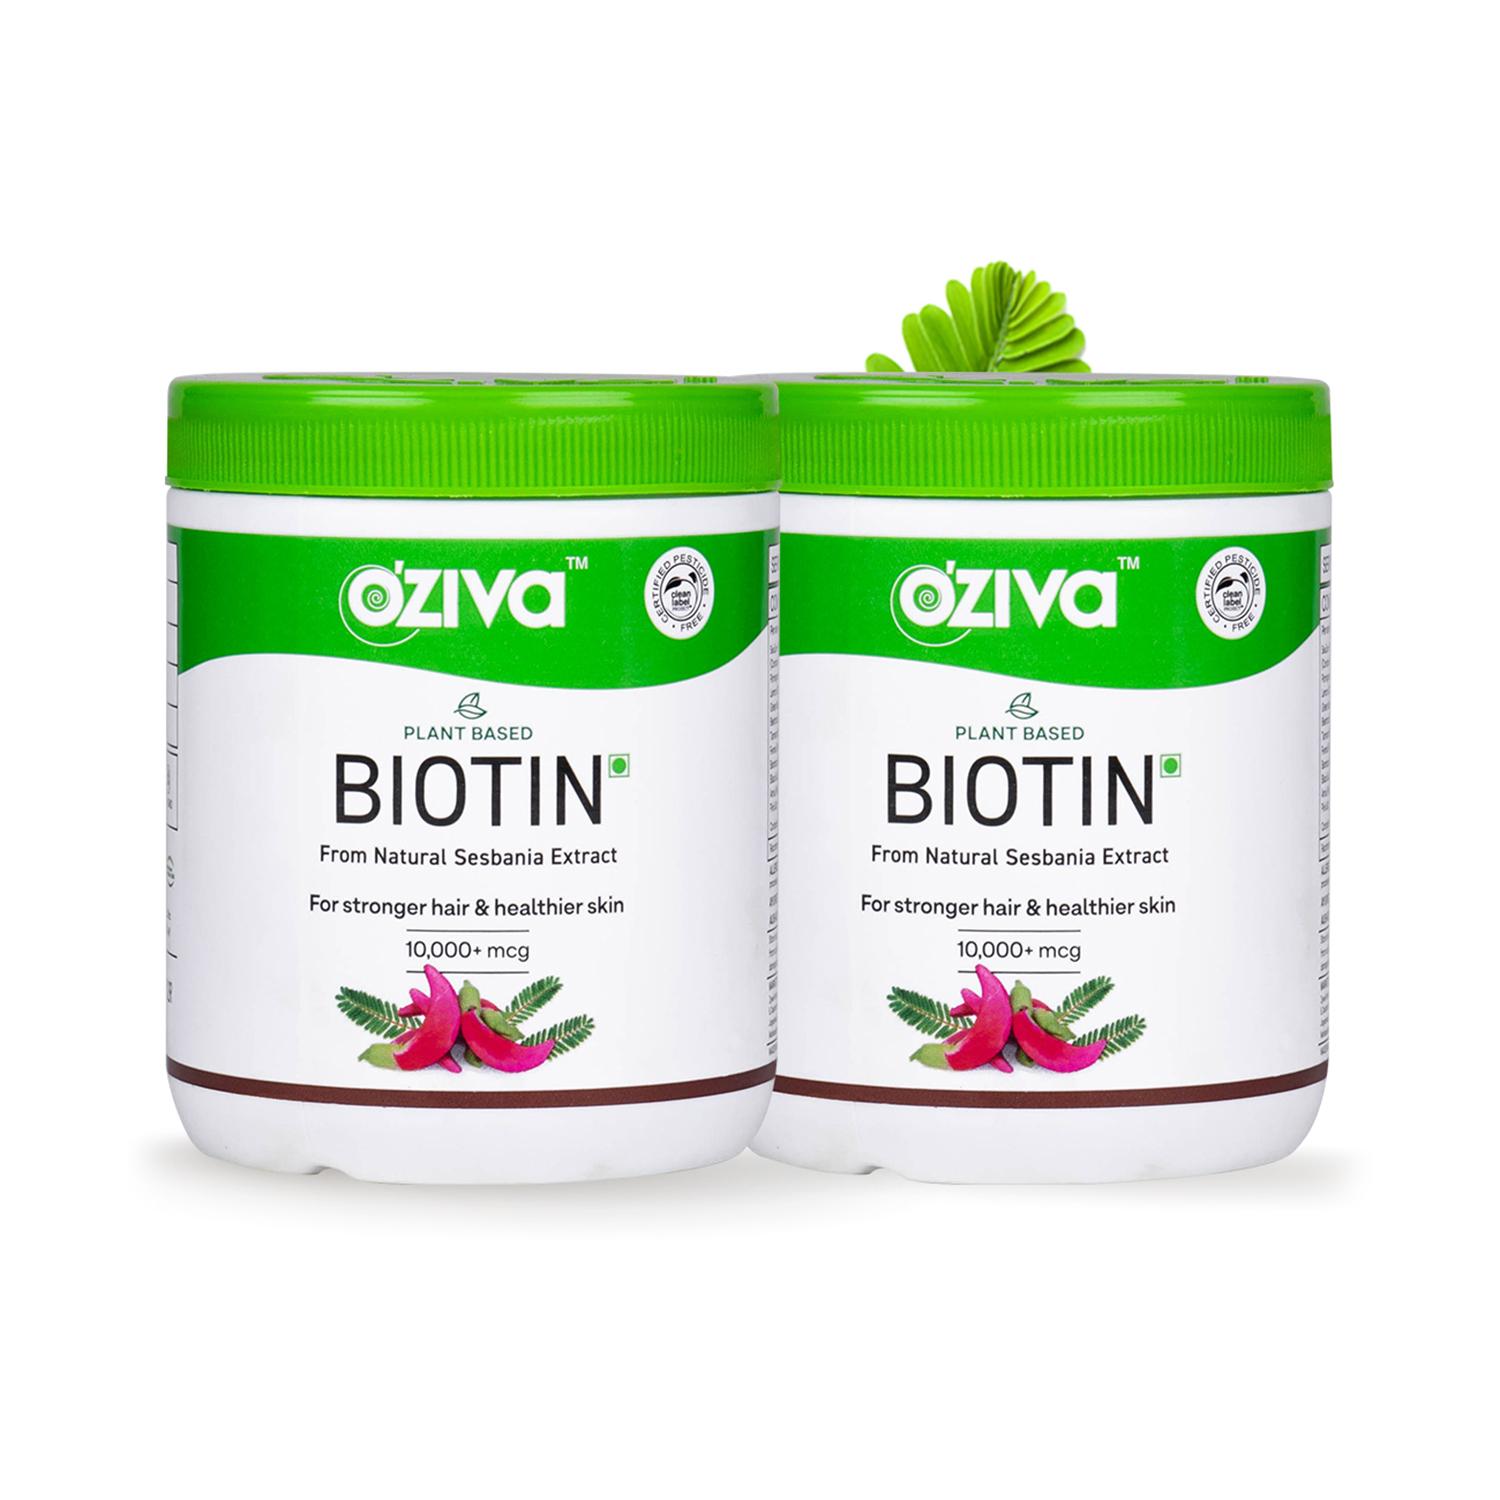 Oziva | Oziva Plant Based Biotin for Hair Growth & Healthier Skin & Nails, Certified Clean & Vegan Combo